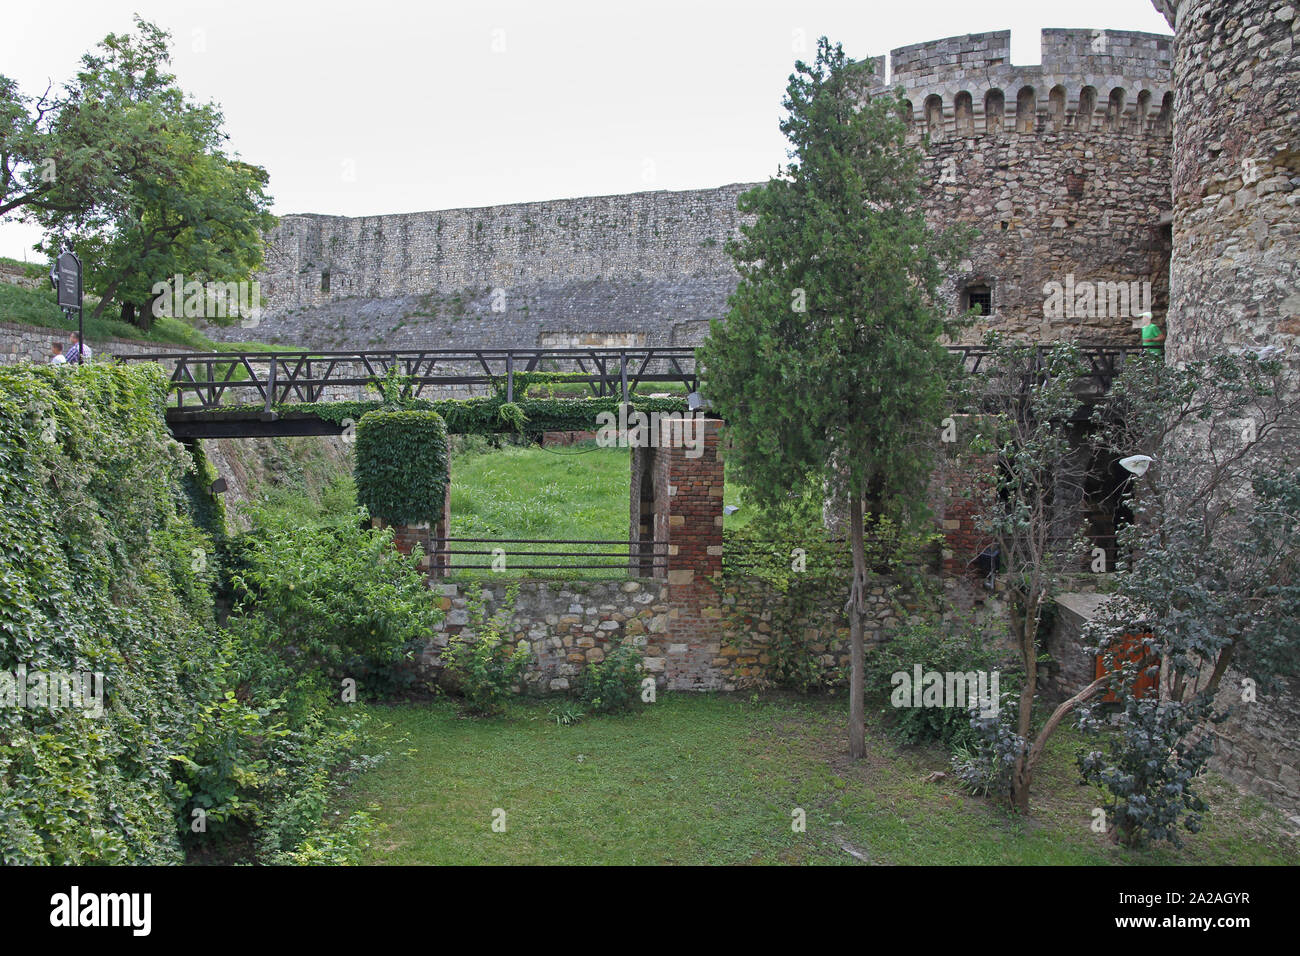 Zindan Gate entrance to the Kalemegdan Fortress, Kalemegdan Park, Belgrade, Serbia. Stock Photo